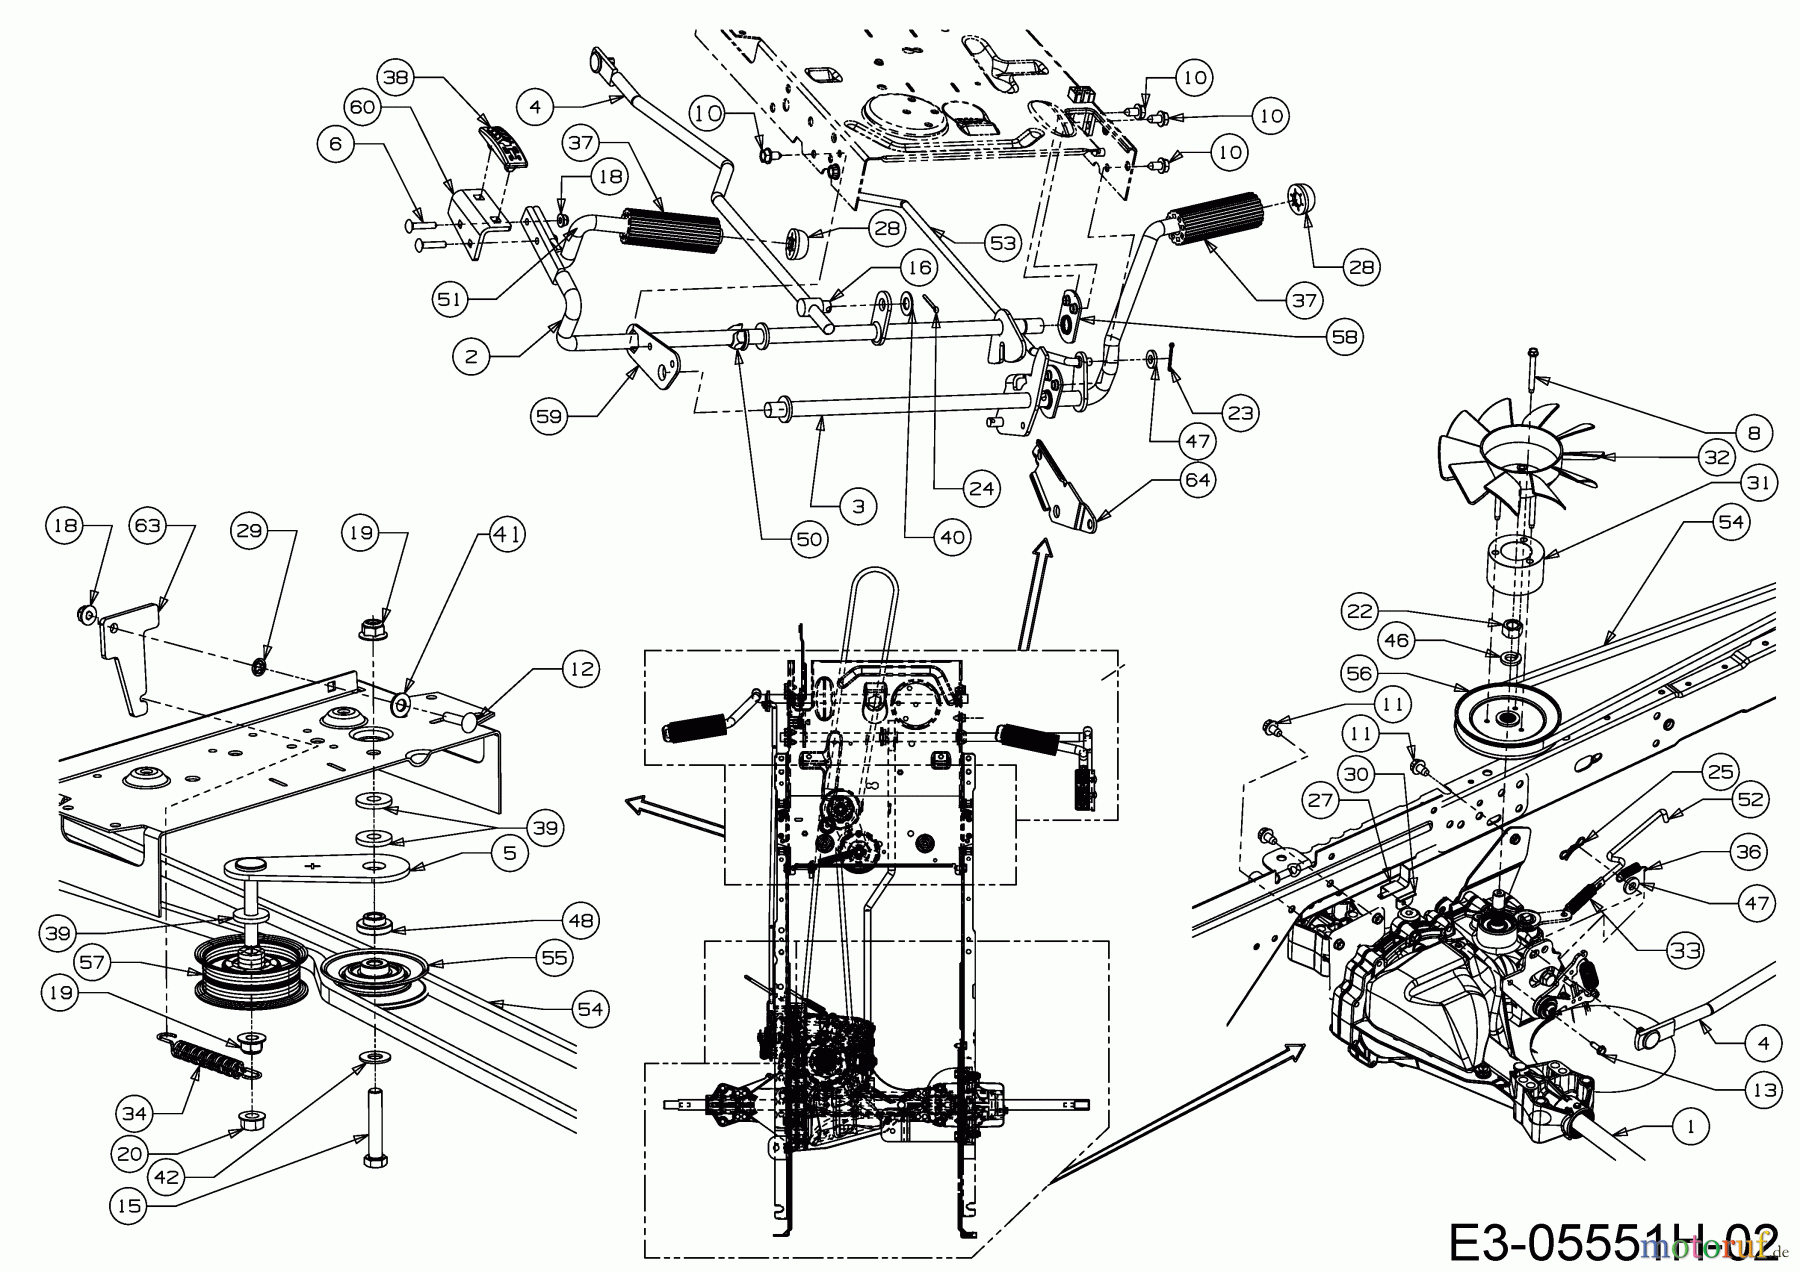  B Power Lawn tractors BT 145-92 AH 13IM71KE648  (2019) Hydrostatic gearbox, Belt, Pedals